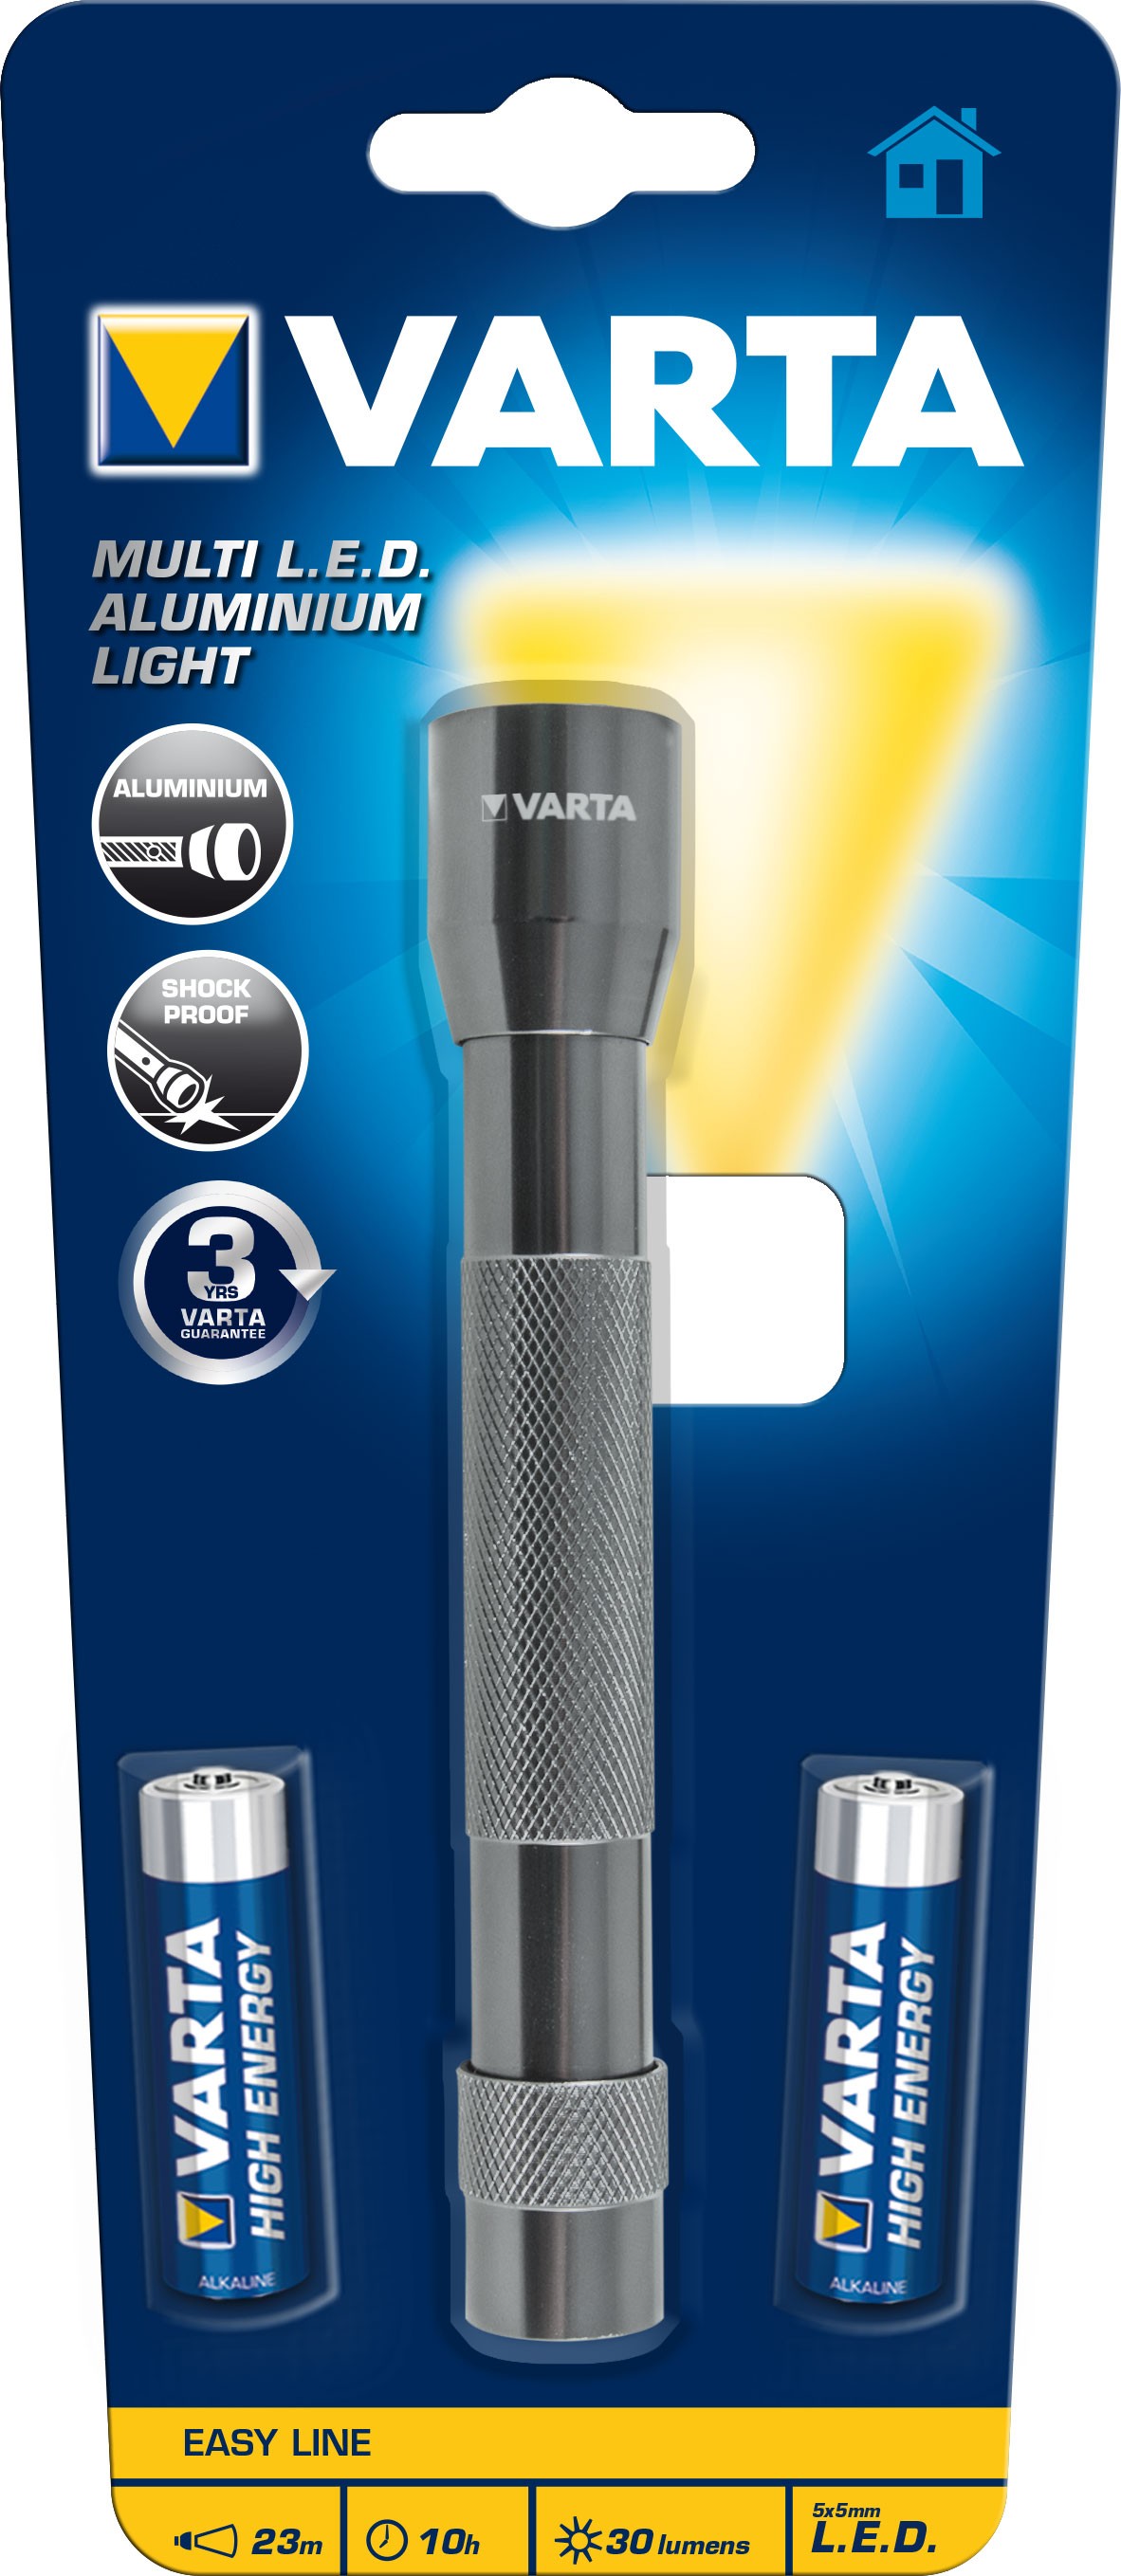 VARTA Taschenlampe Multi LED Alu Light 2AA